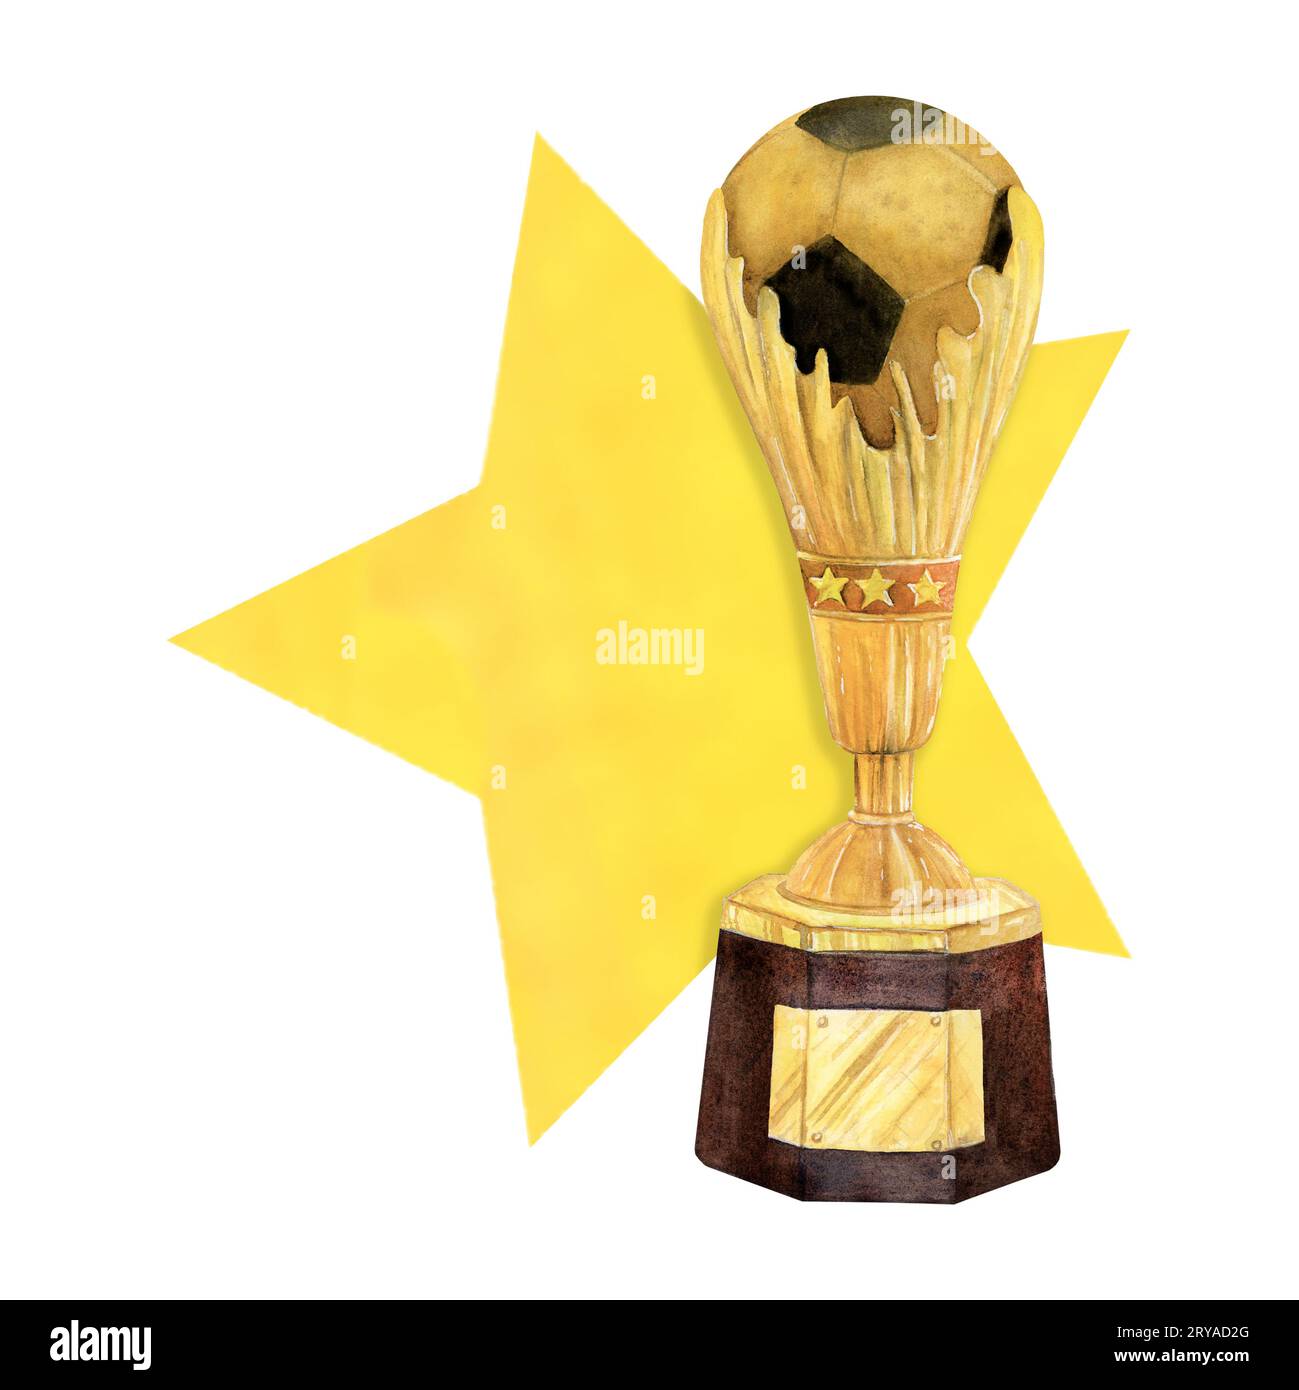 Coupe de football, Coupe ballon de football, Trophée Jilin - my-trophy